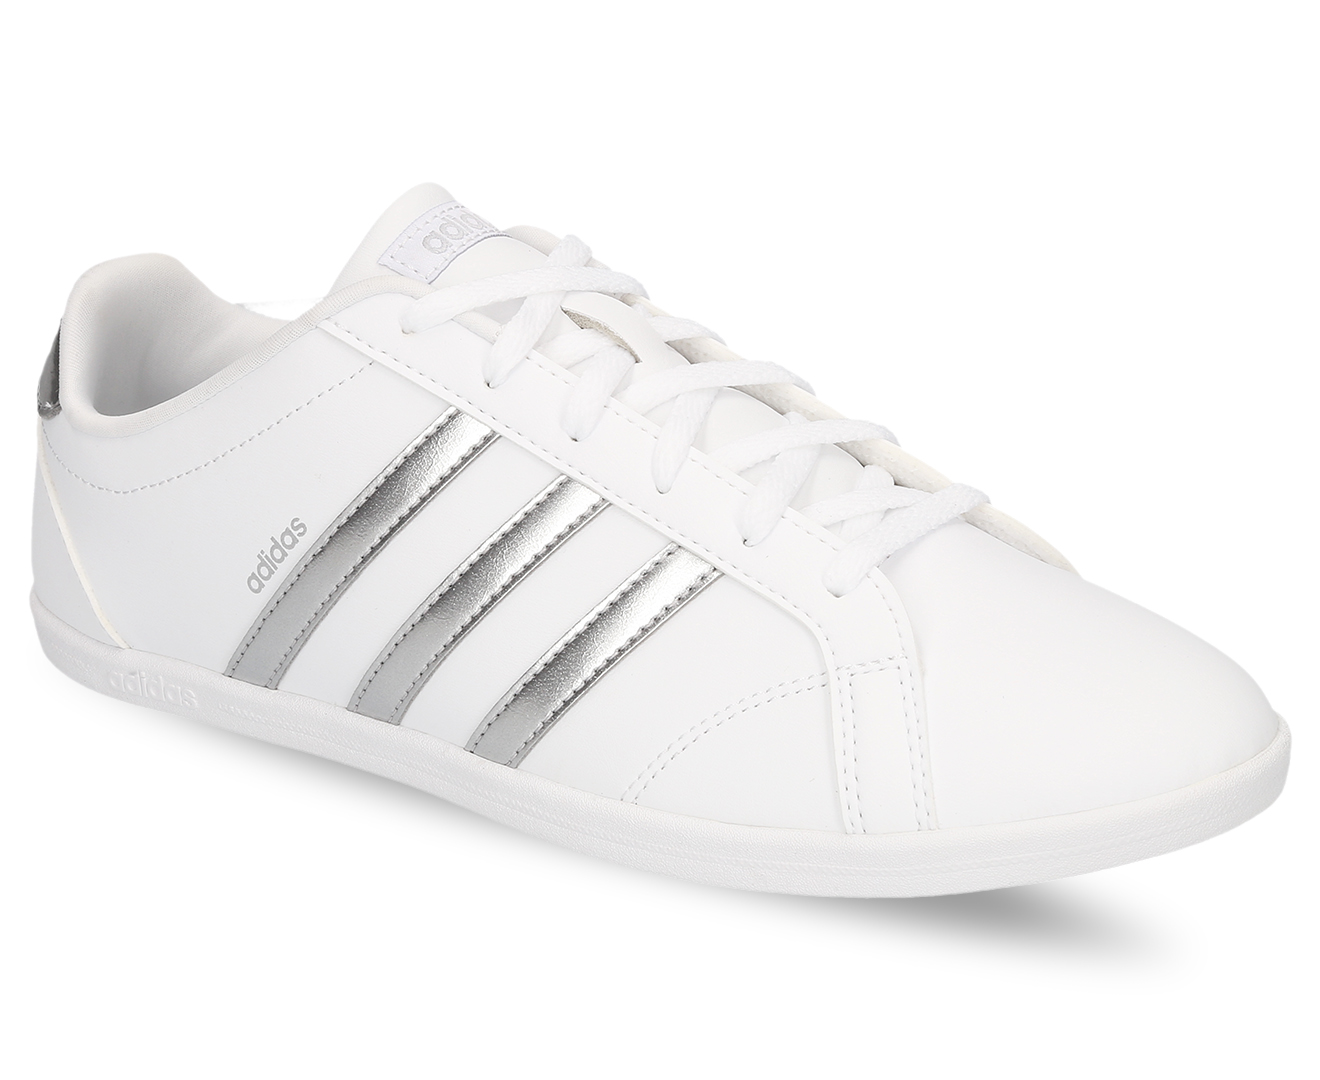 Ópera nacionalismo romántico Adidas Women's Coneo QT Shoe - Footwear White/Metallic Silver | Catch.com.au